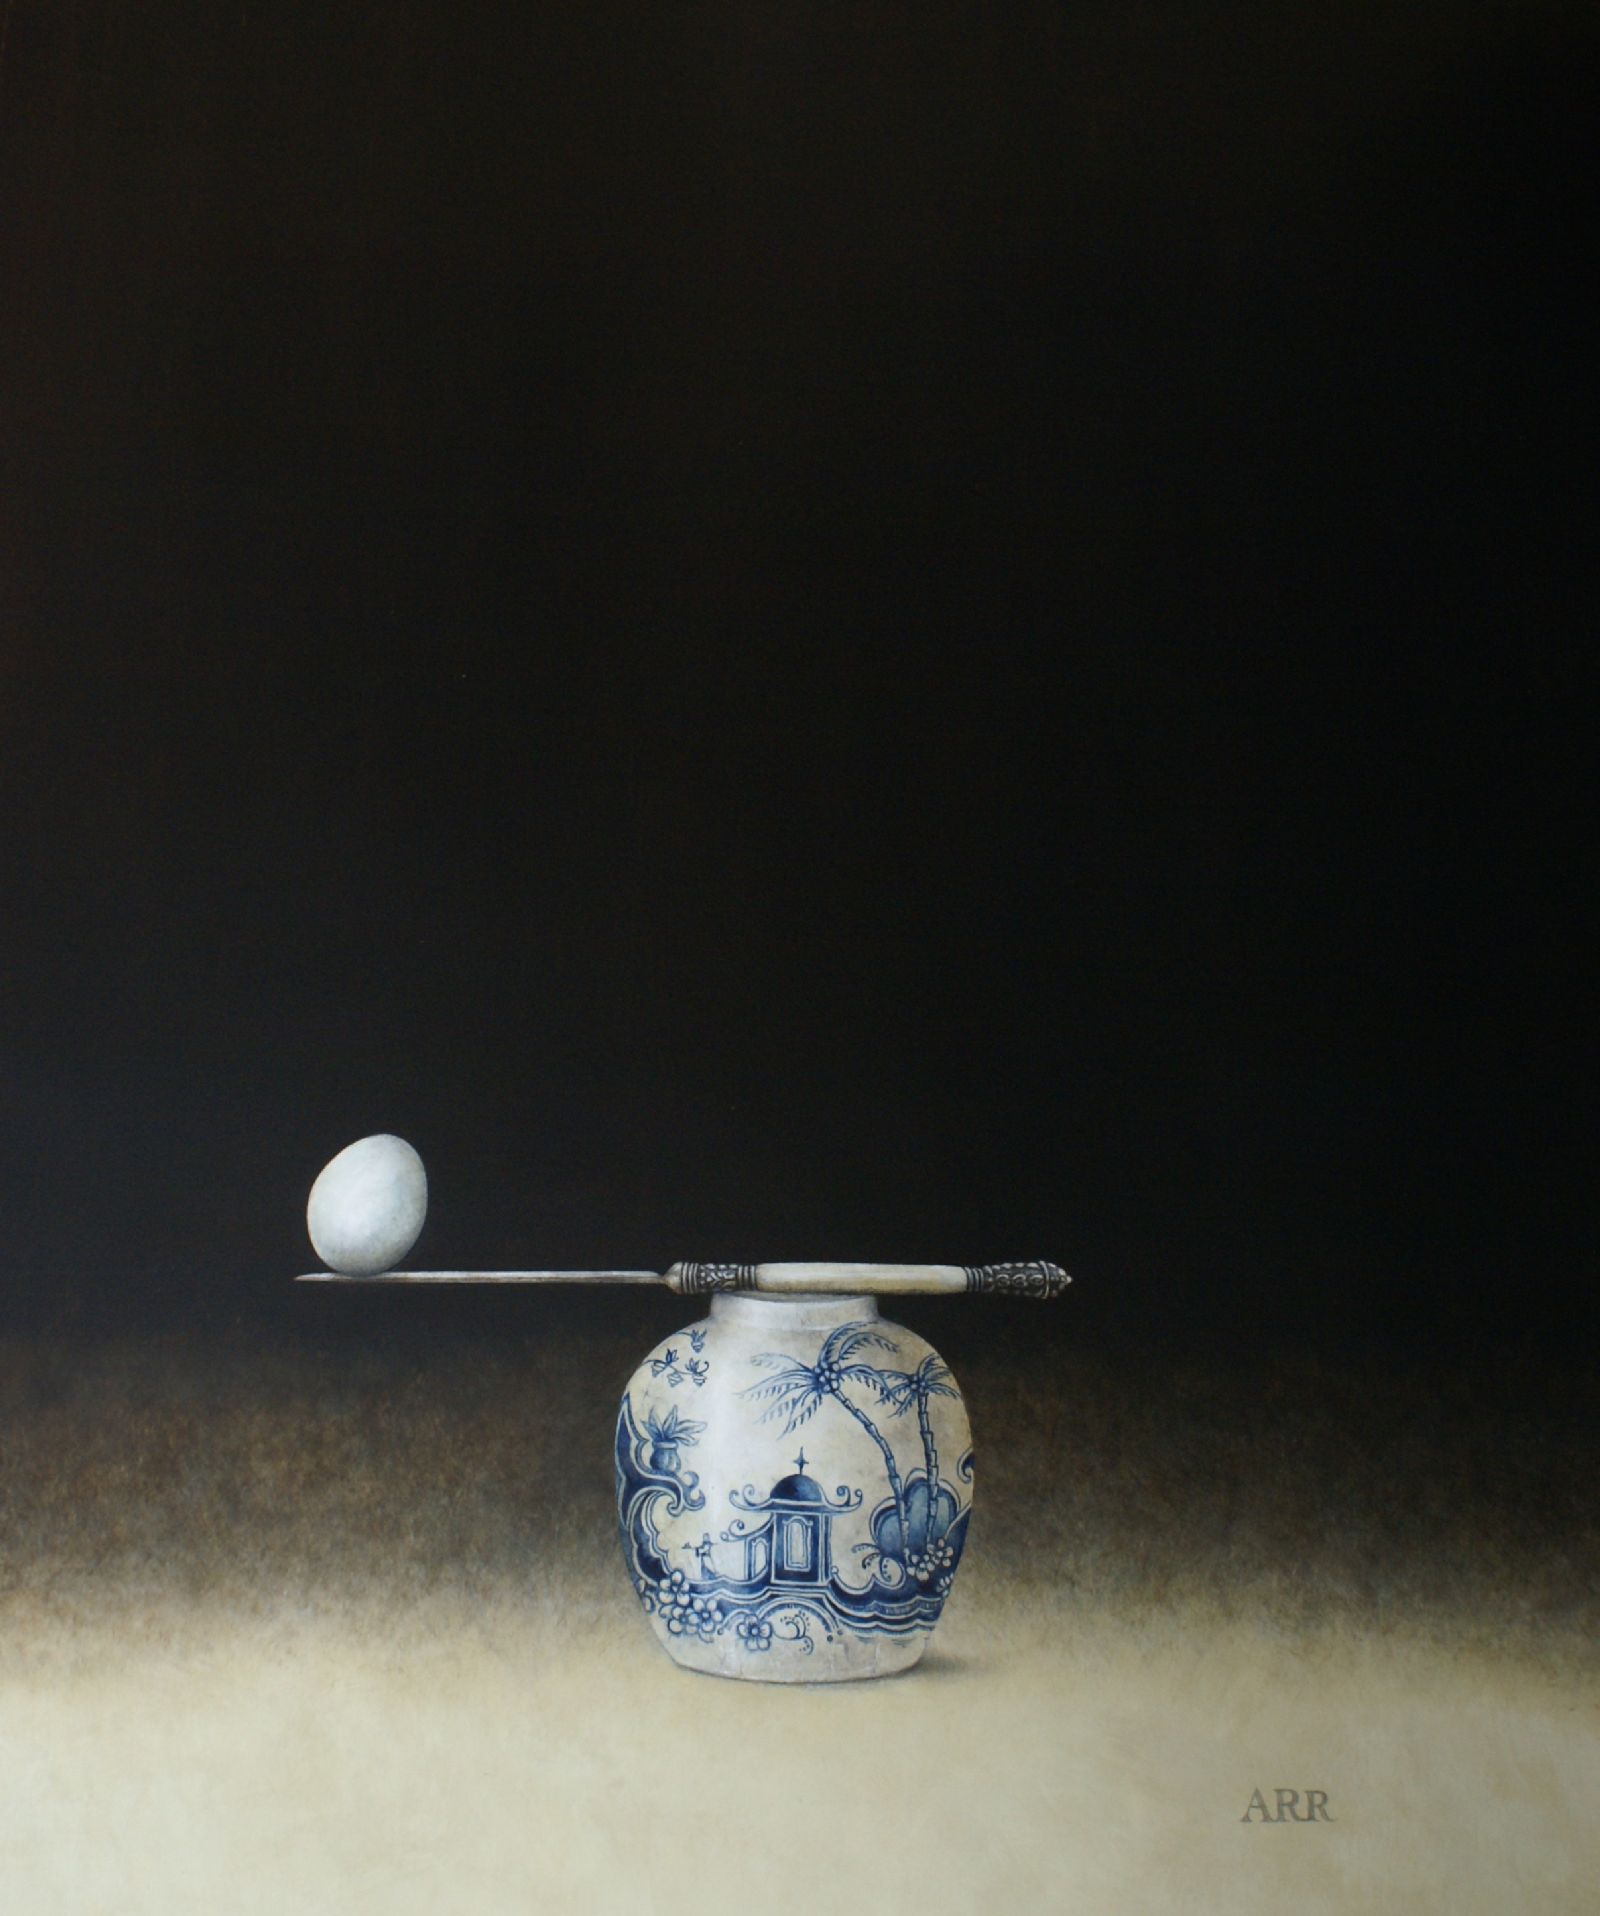 Pagoda Jar with Pearl Knife and Balancing Egg by Alison Rankin